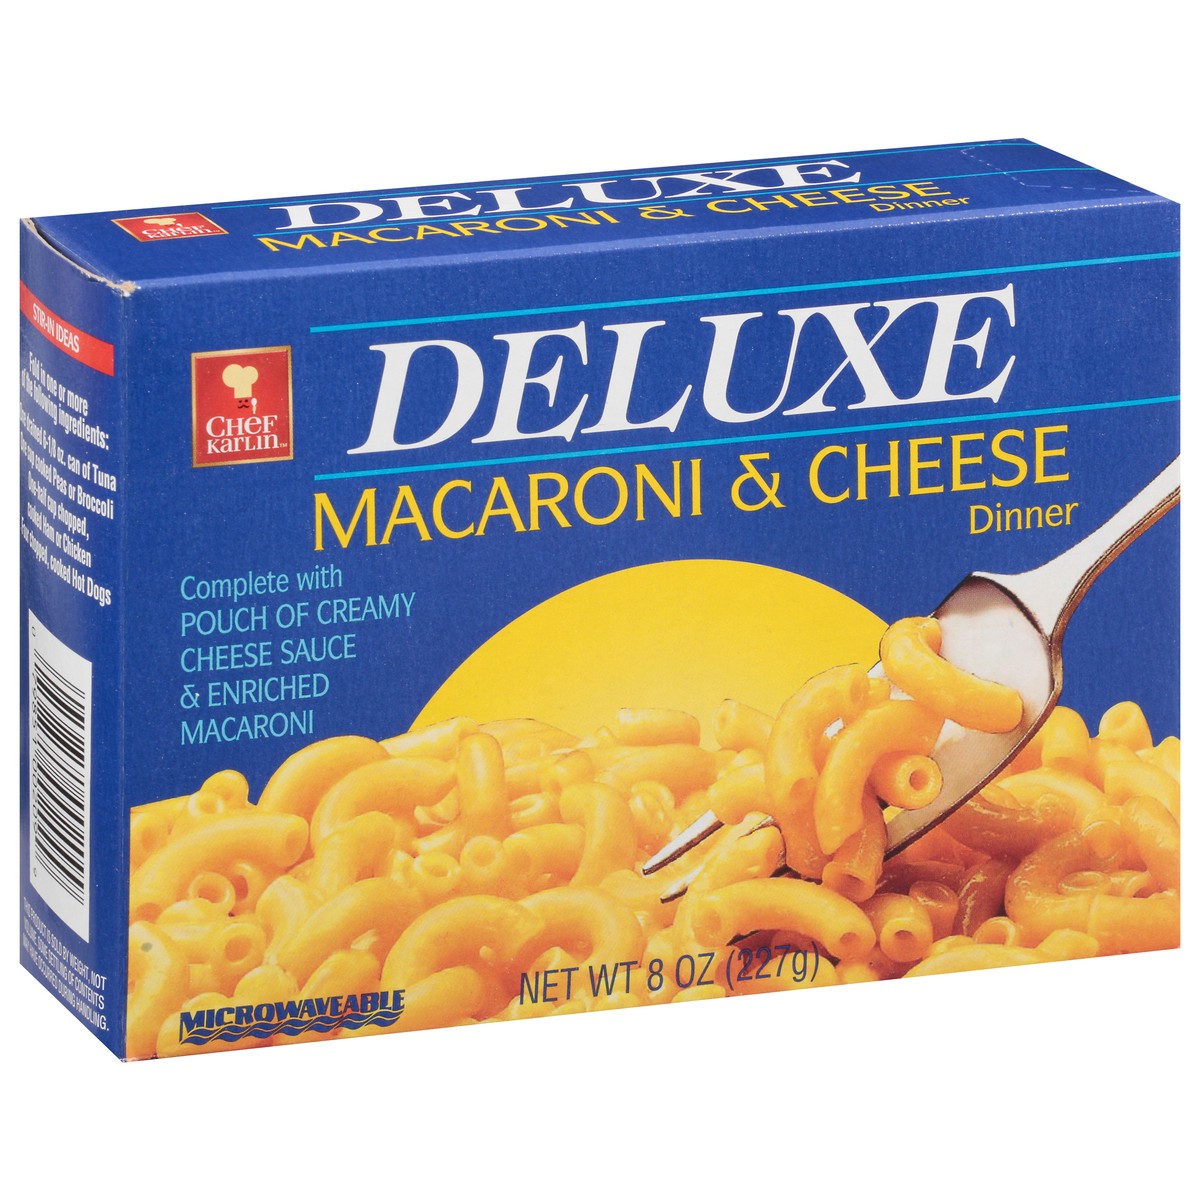 slide 2 of 13, Chef Karlin Deluxe Macaroni & Cheese Dinner 8 oz, 8 oz